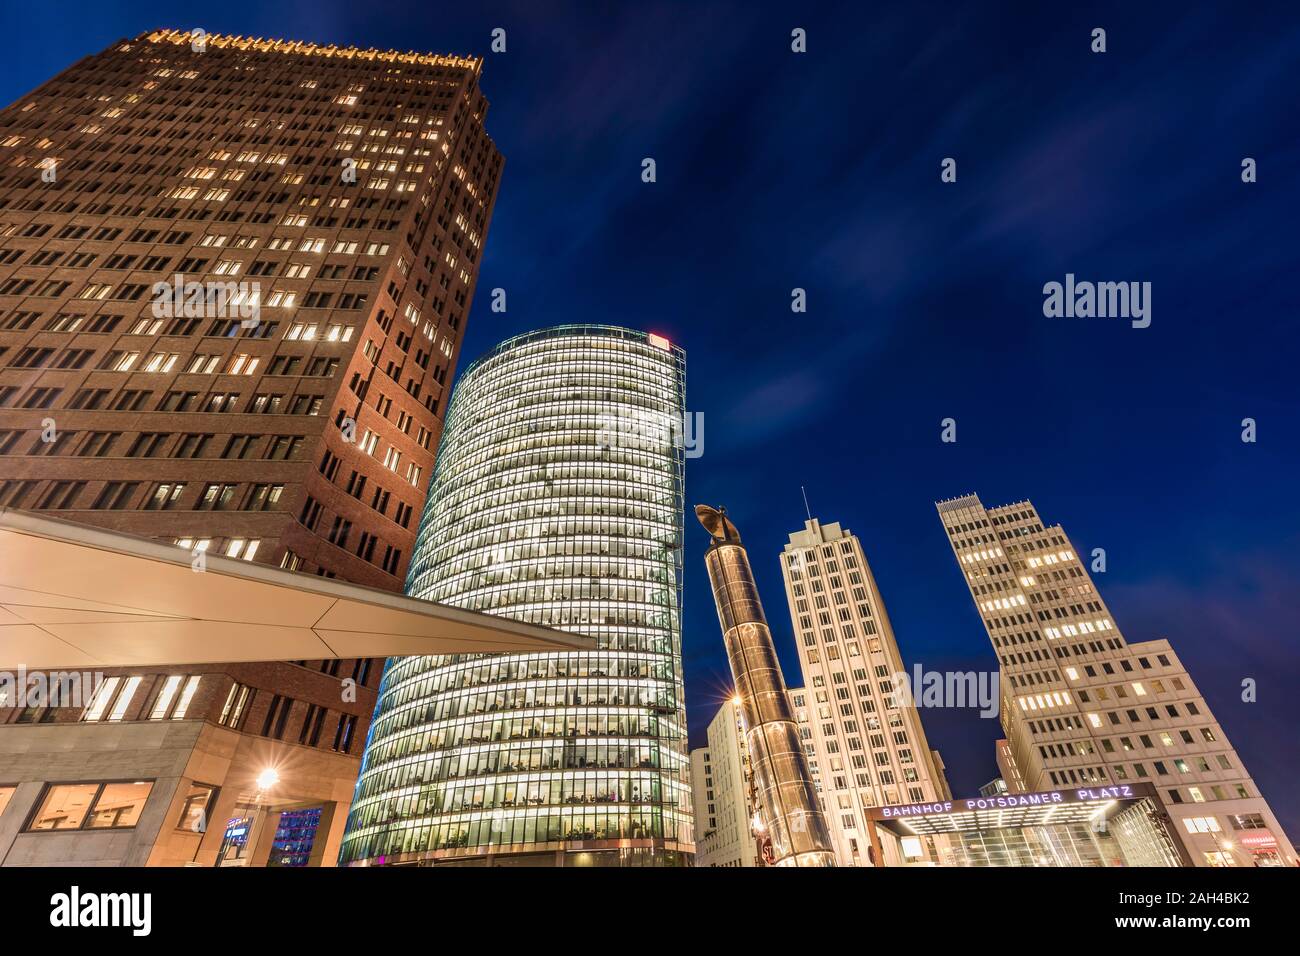 Germania, Berlino Mitte, Potsdamer Platz, Kollhoff-Tower, Bahntower, Beisheim-Center, basso angolo vista dei grattacieli al crepuscolo Foto Stock